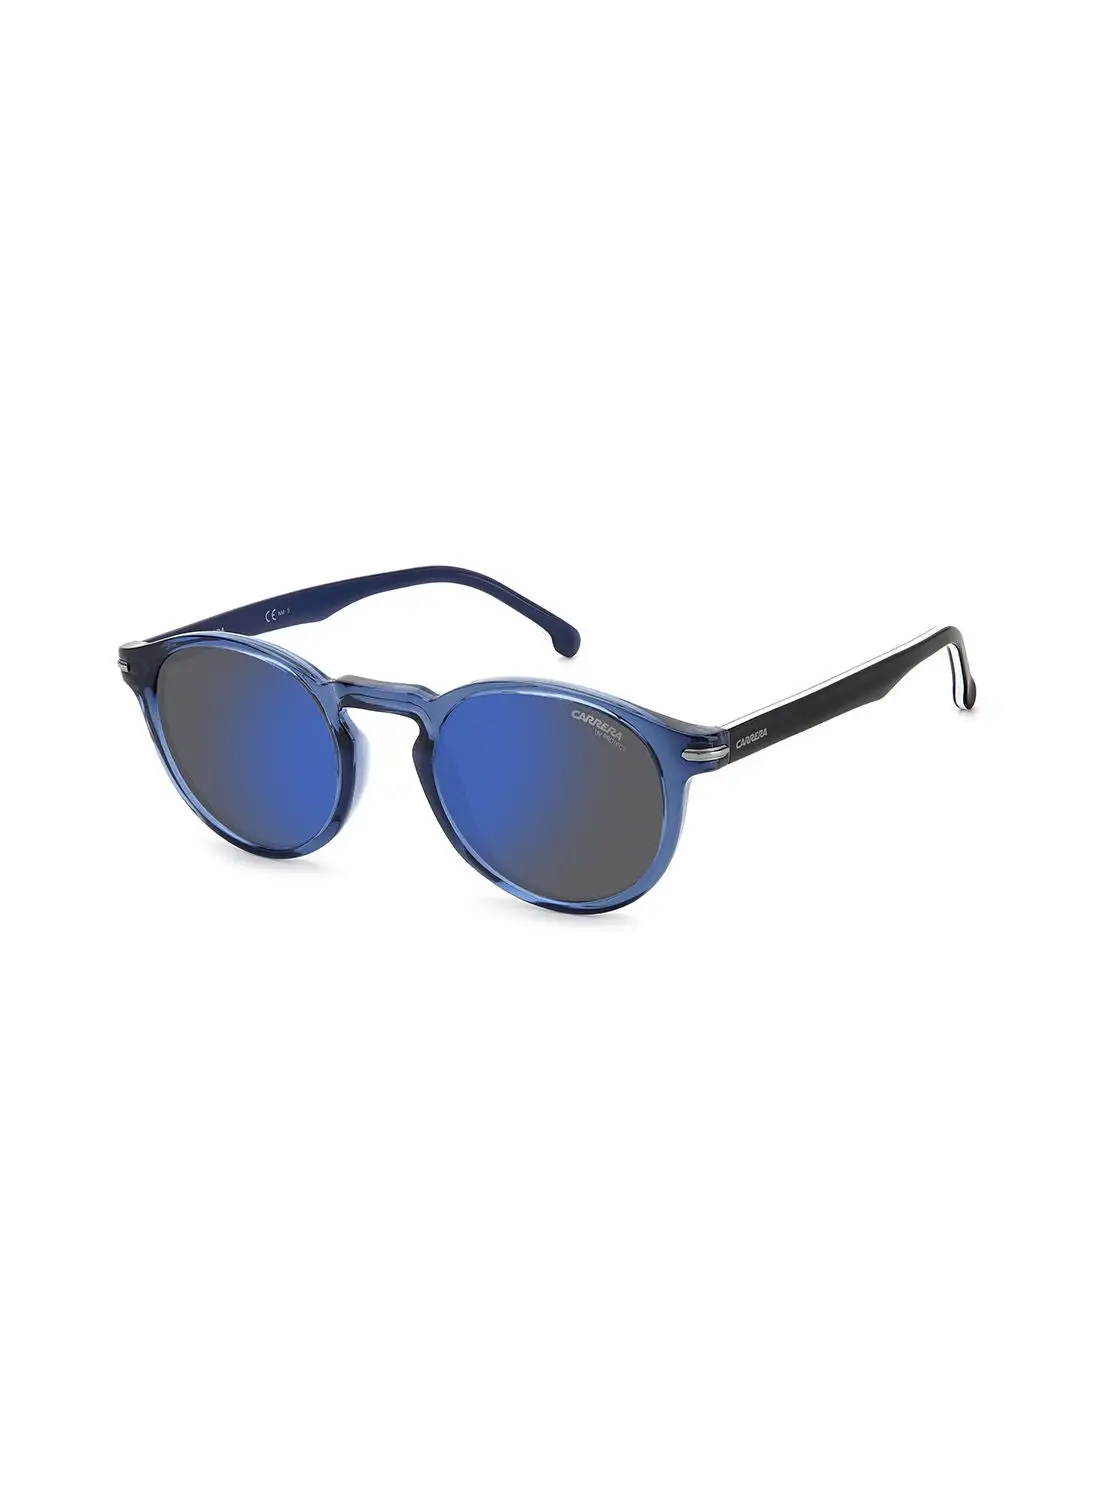 Carrera Unisex UV Protection Round Sunglasses - Carrera 301/S Blue 50 - Lens Size: 50 Mm